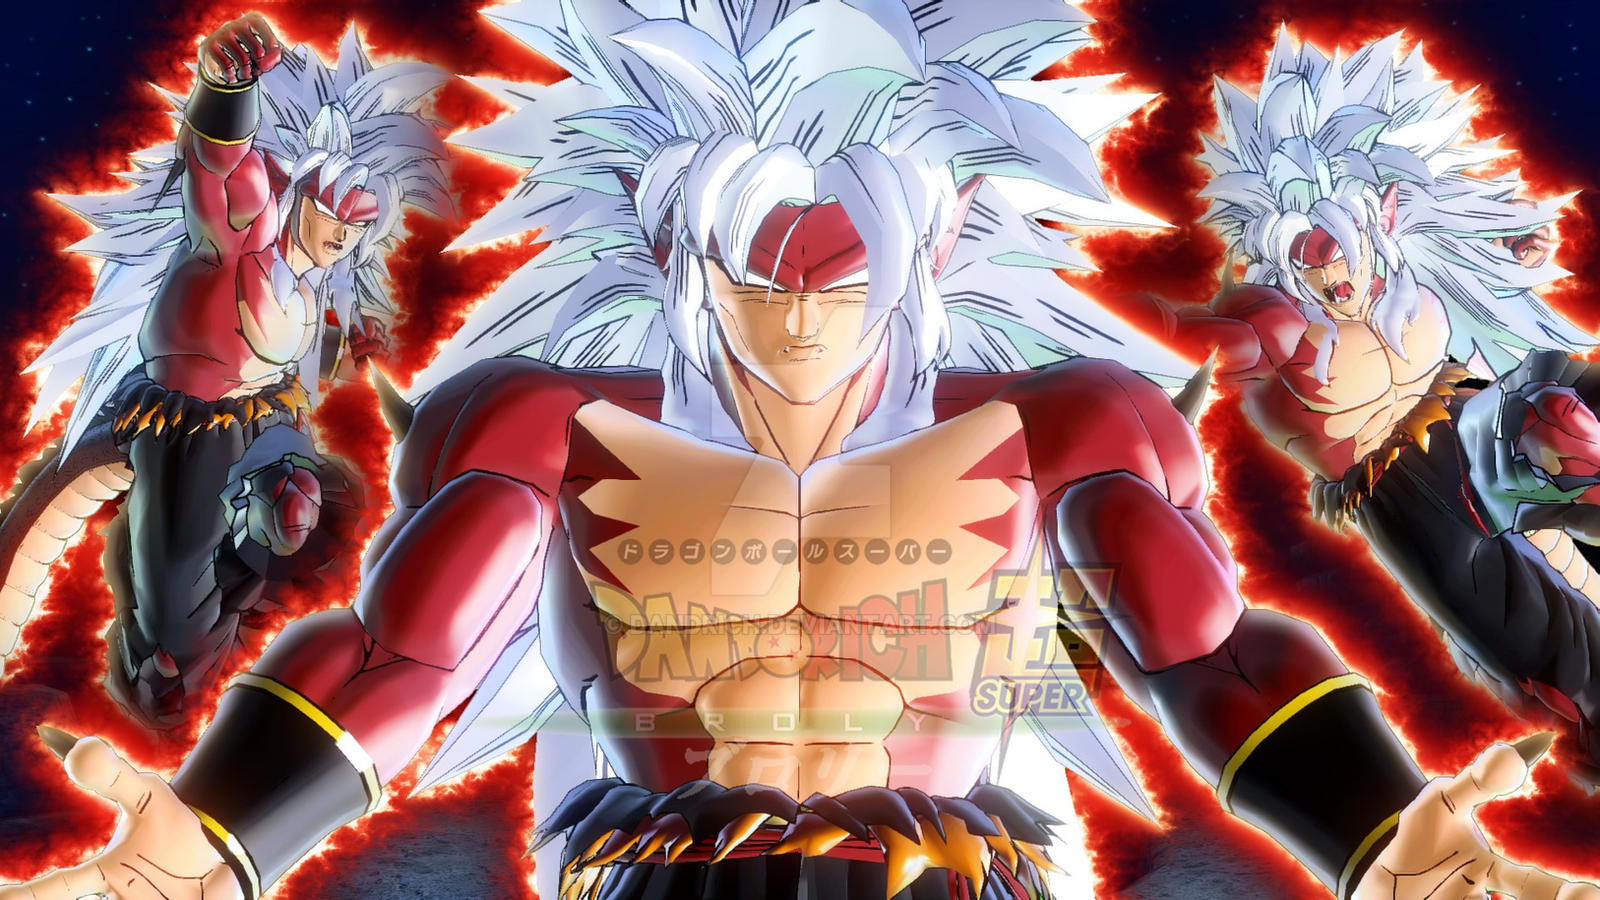 Ryu's - Dragon Ball Xenoverse 2 Mods by Dandrich on DeviantArt